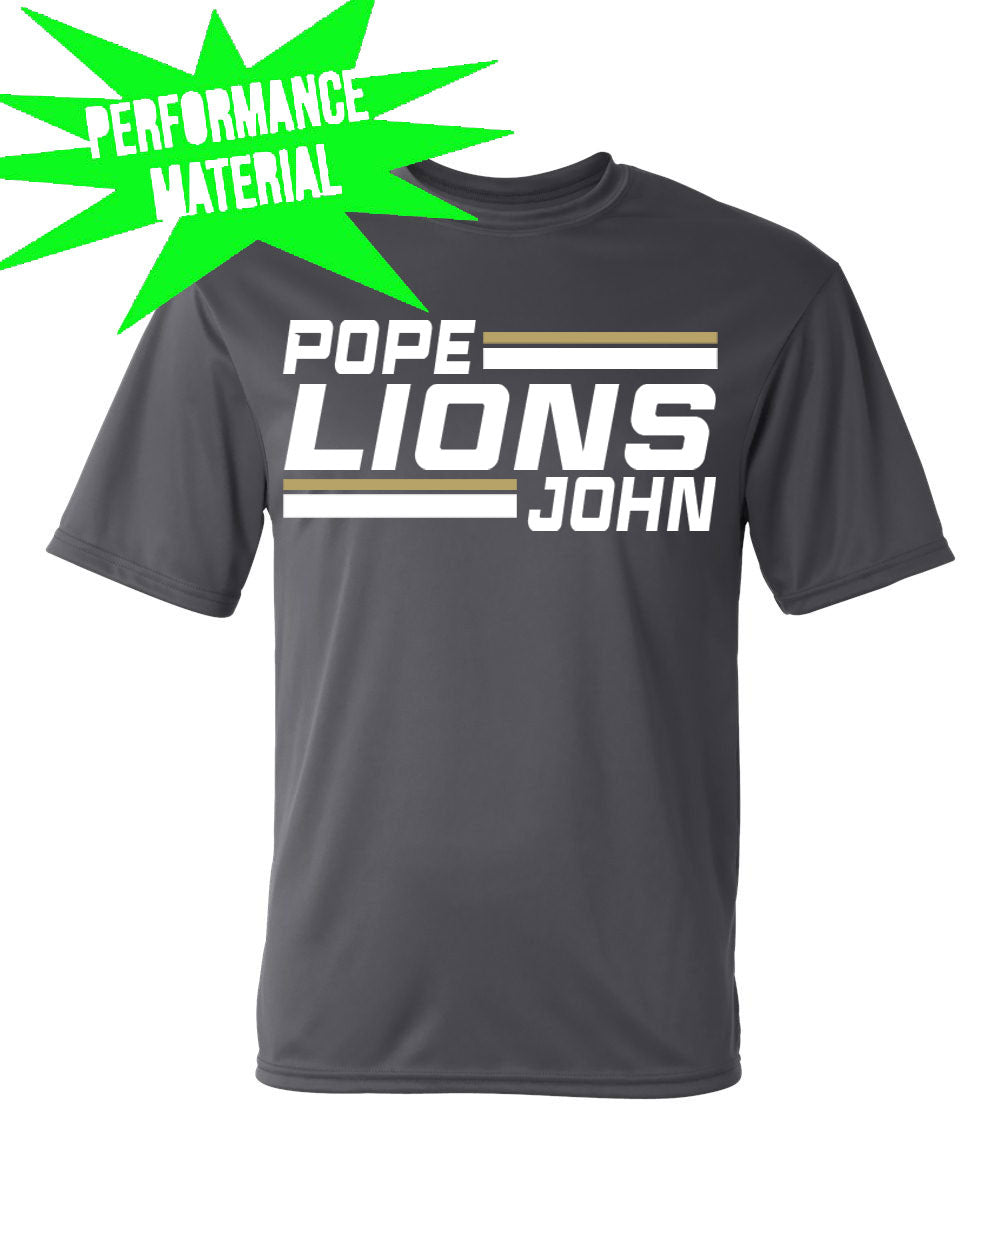 Pope John Cheer Performance Material design 5 T-Shirt